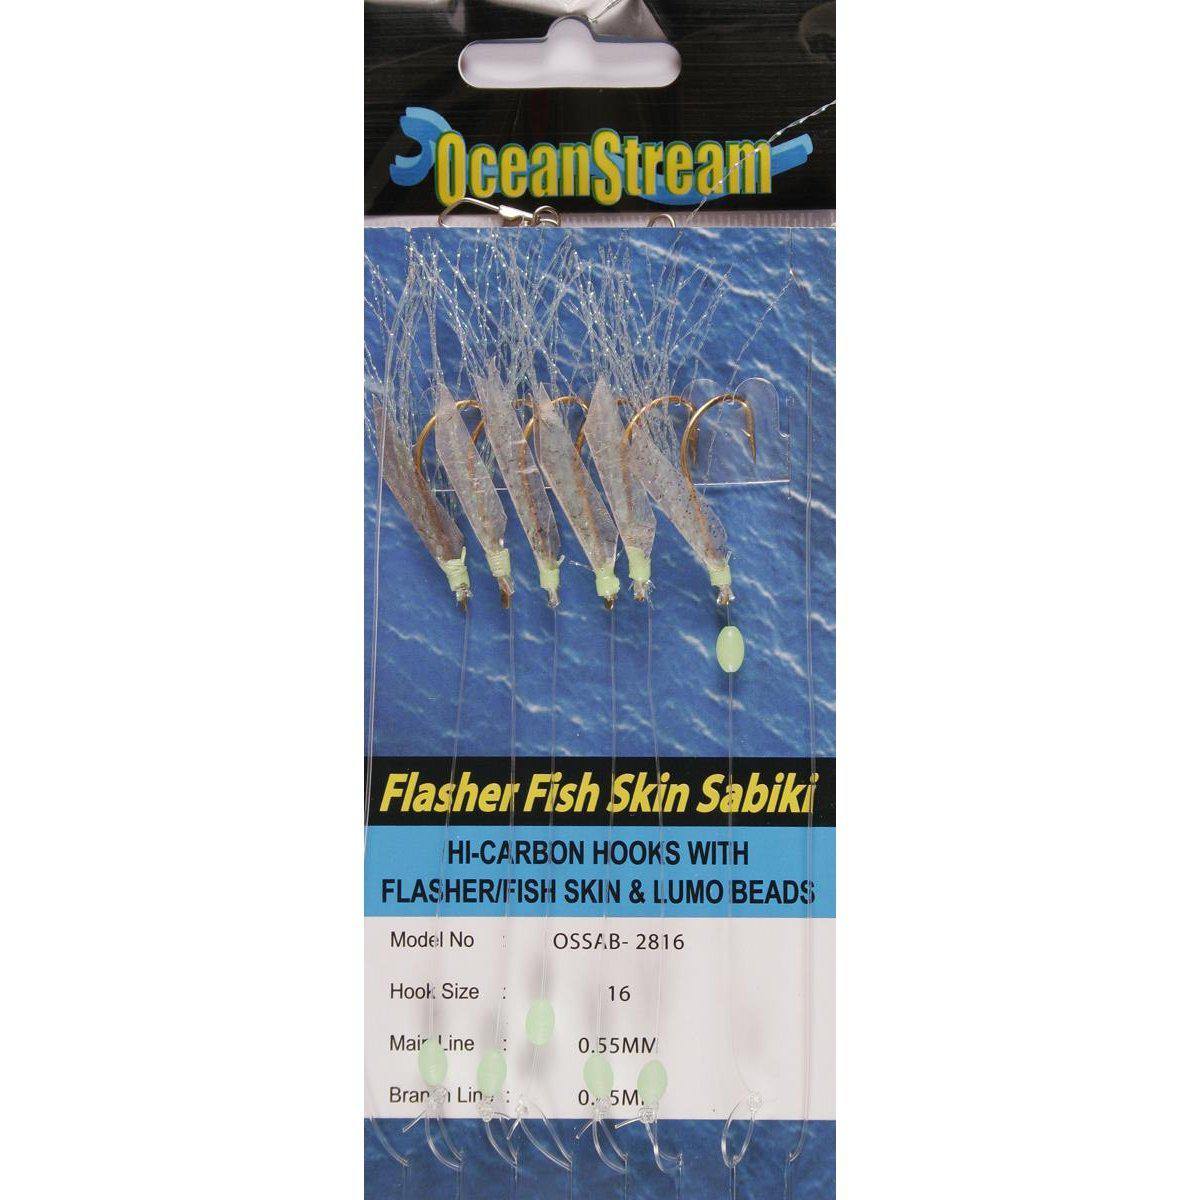 OceanStream Flashe Fish Skin Sabiki Bait Rig - The Bait Shop Gold Coast